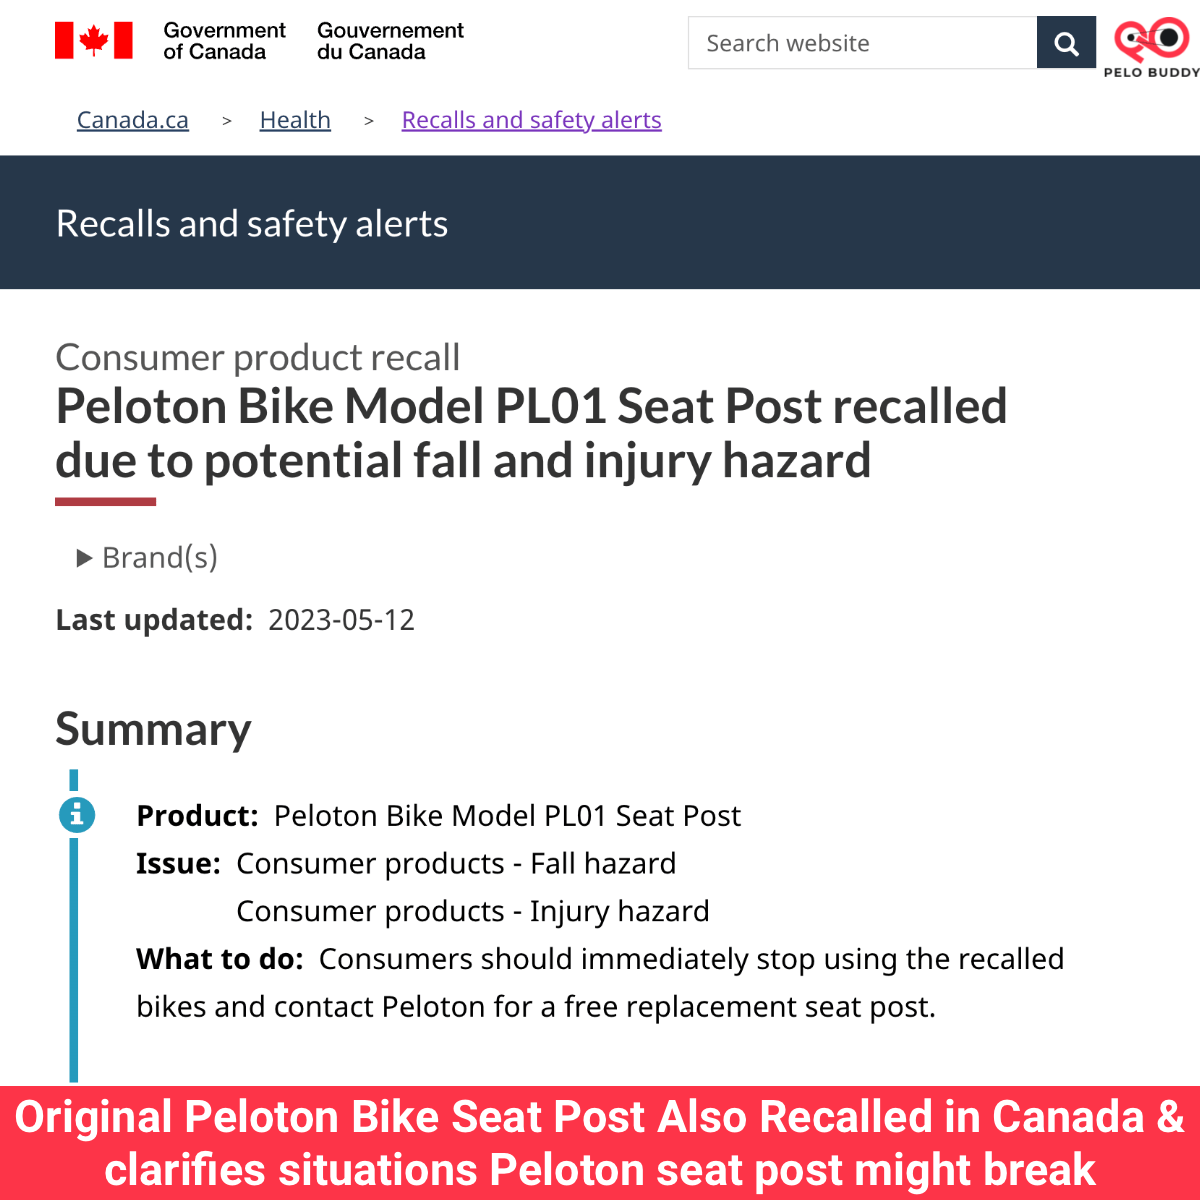 Original Peloton Bike Seat Post Also Recalled in Canada